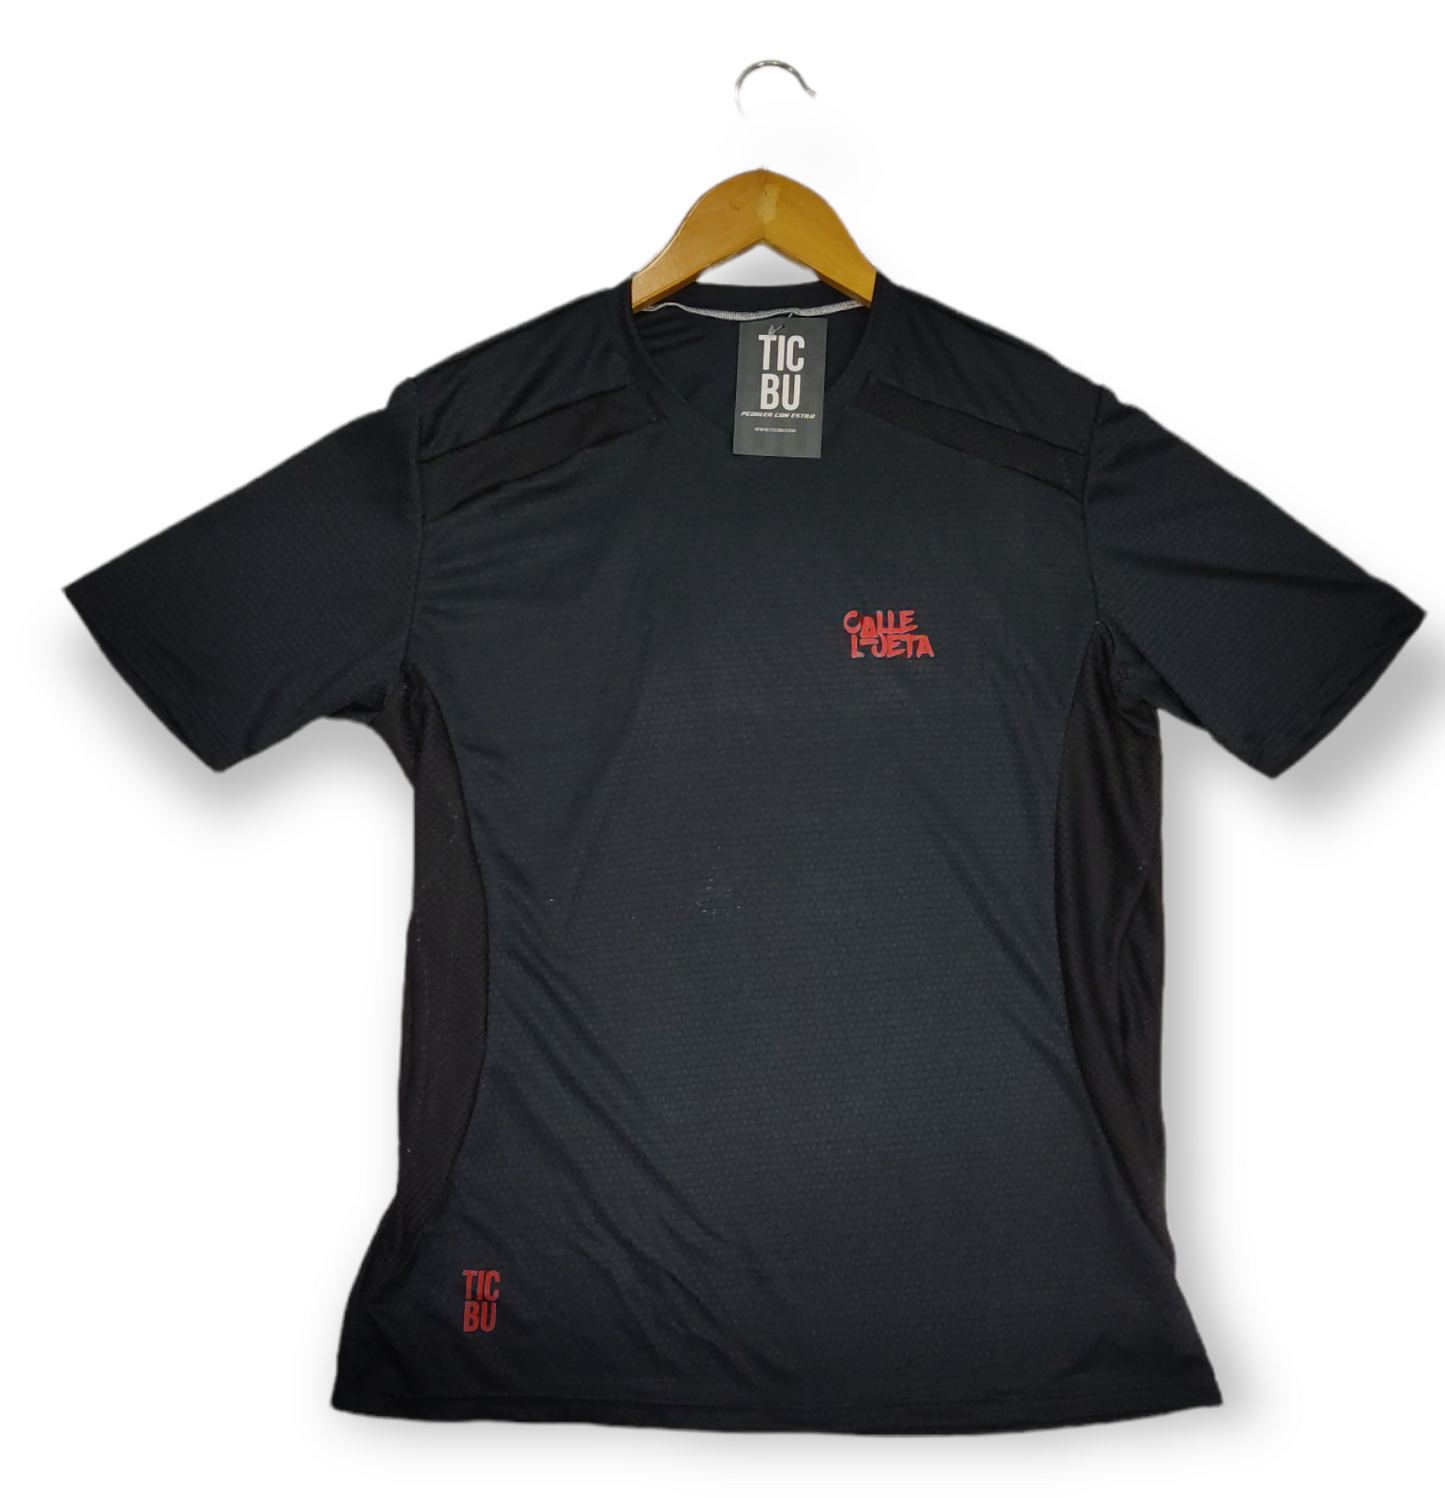 Men's T-shirt Ref: calle.la.jeta